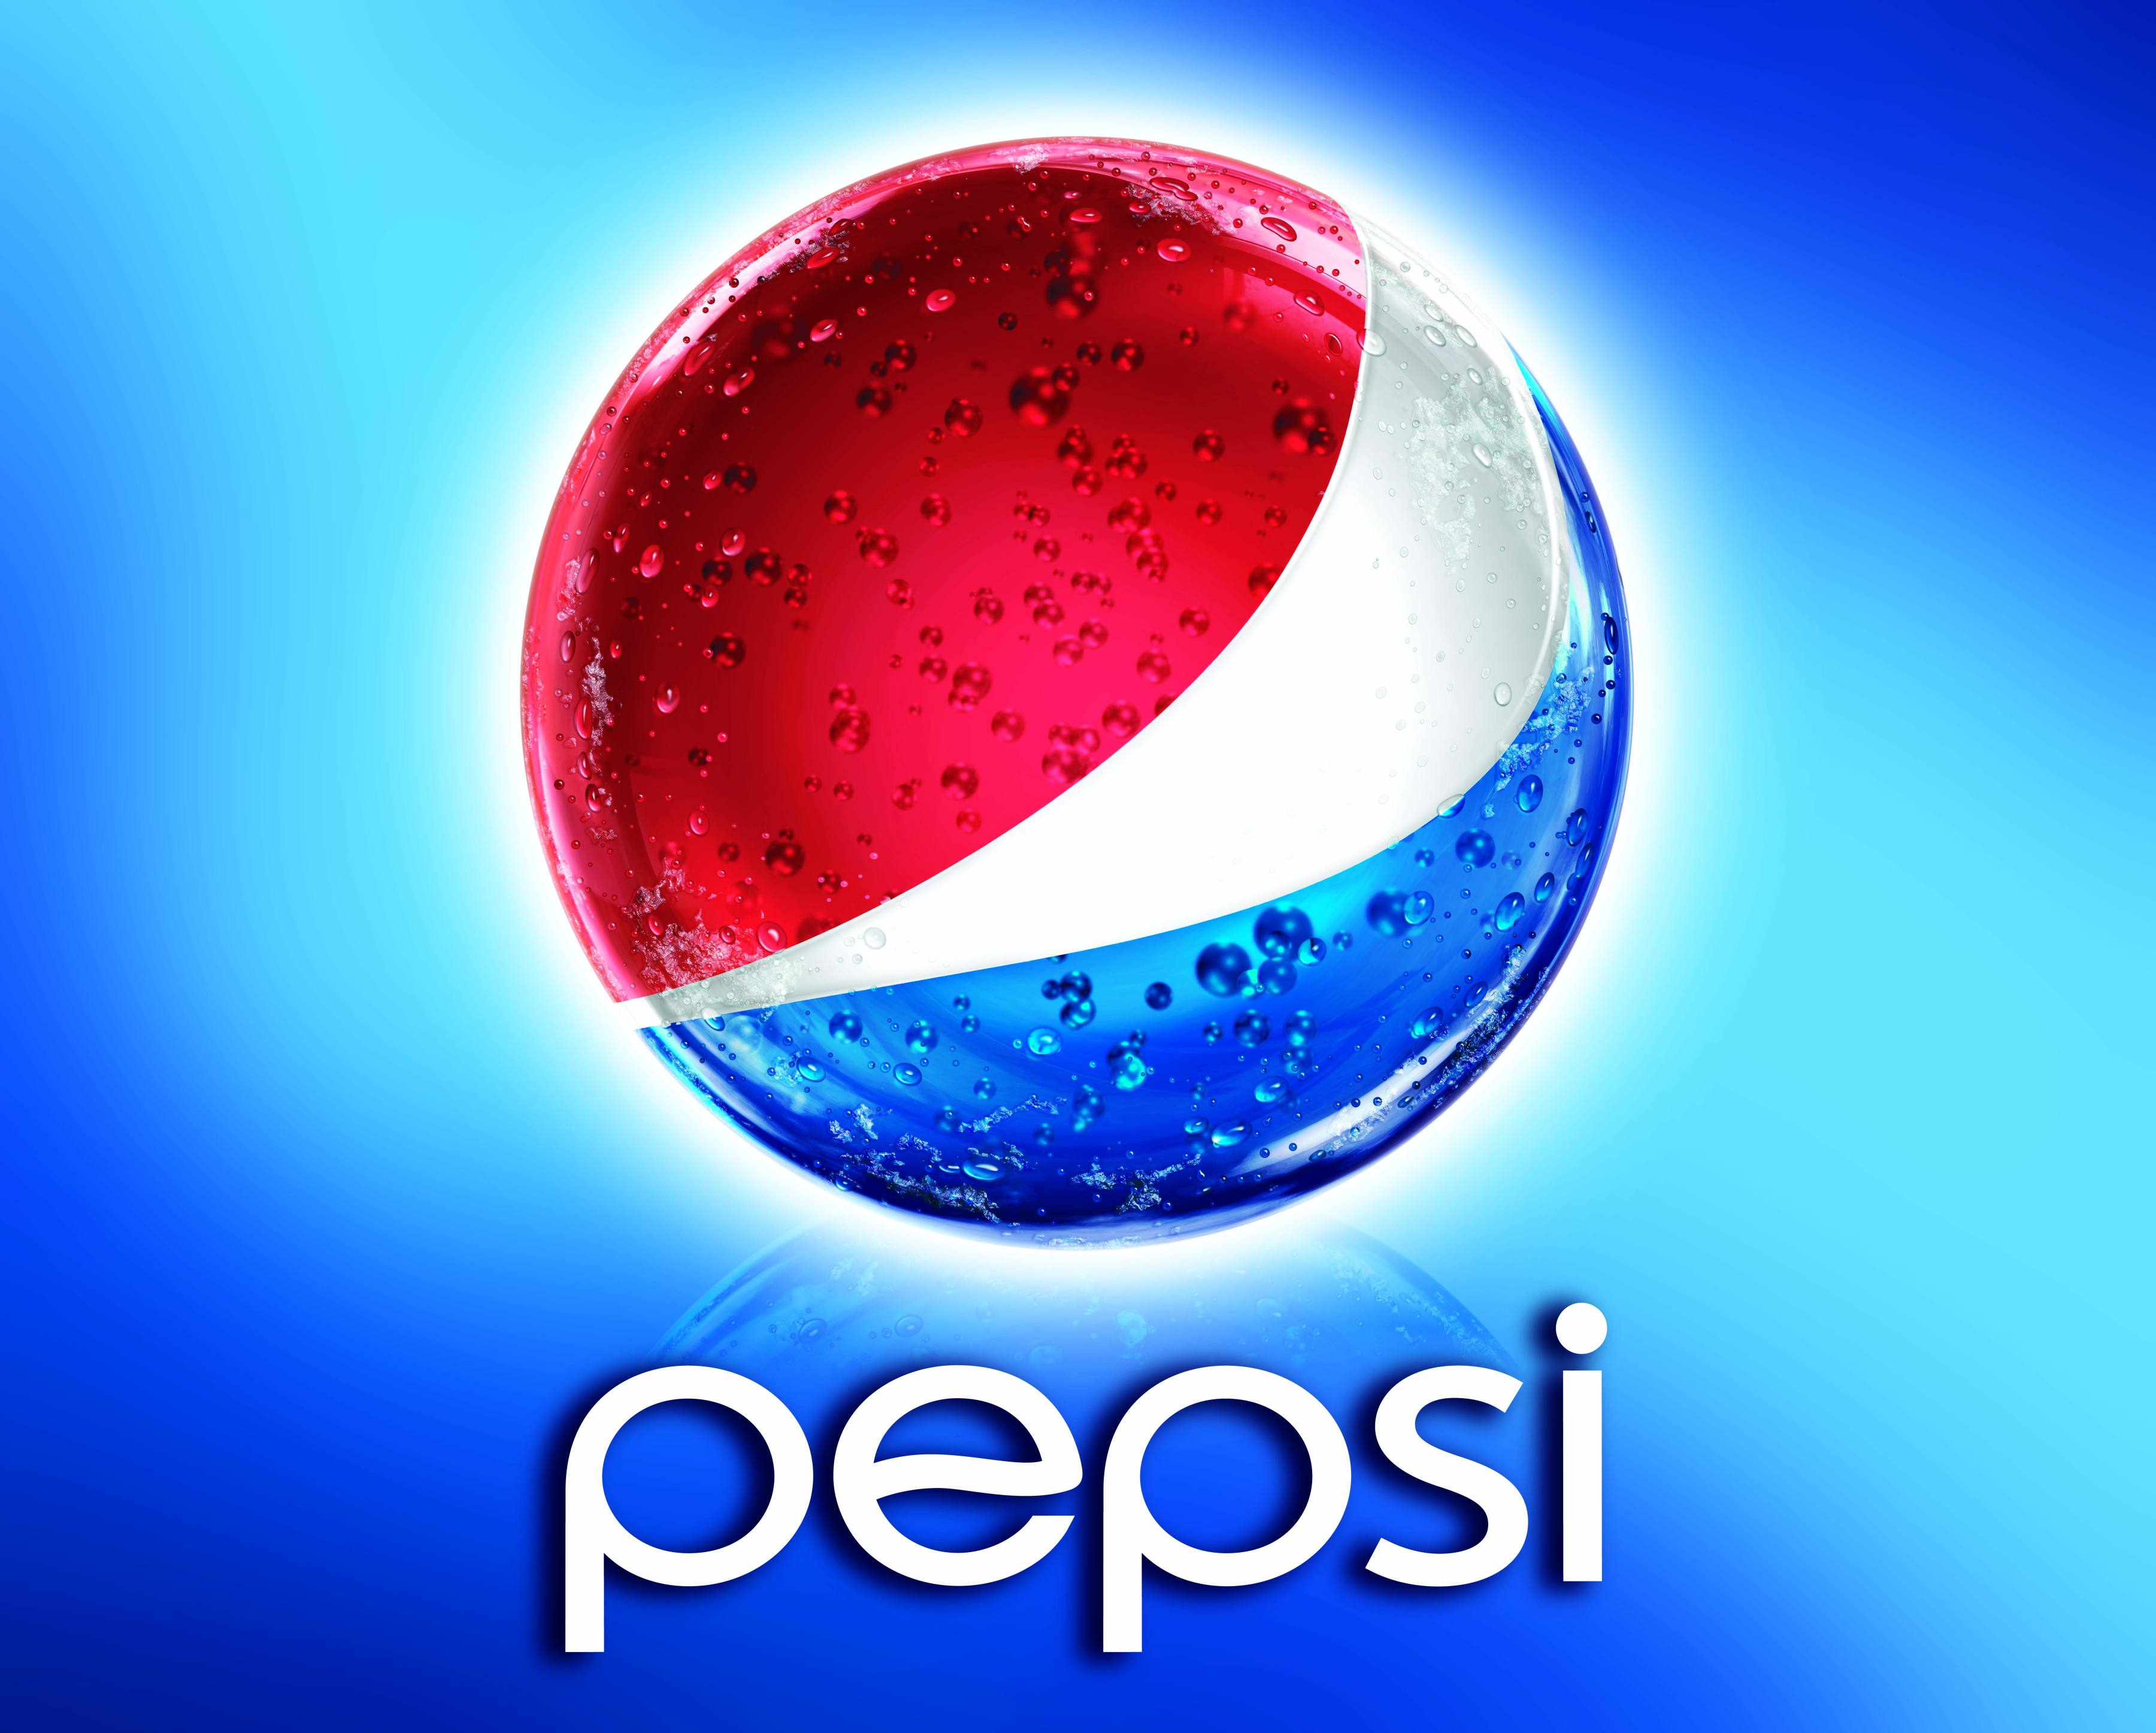 Pepci Logo - Pepsi Logo 2013 HD Wallpaper, Background Images